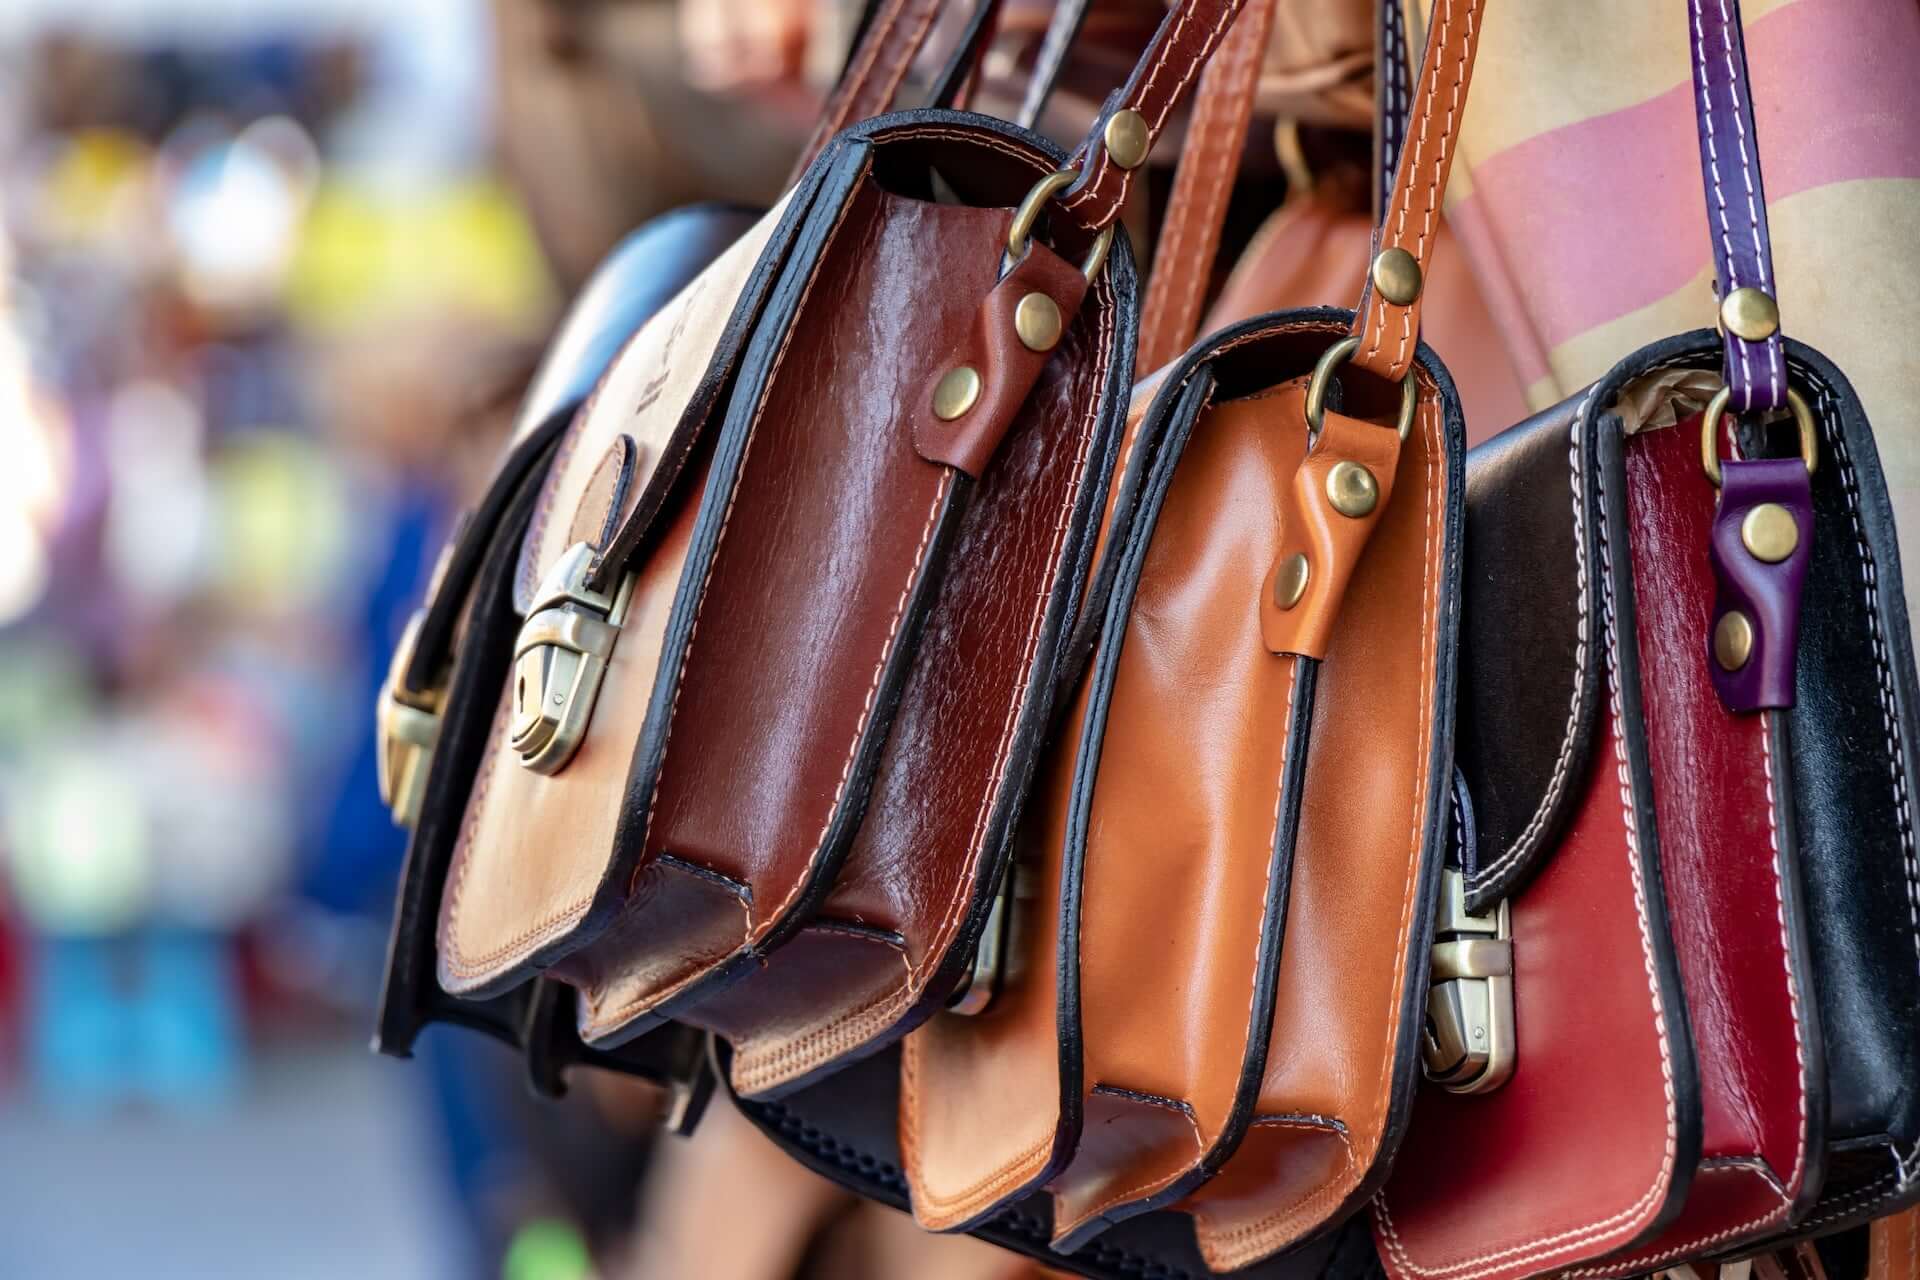 A set of three multicolored leather handbags.